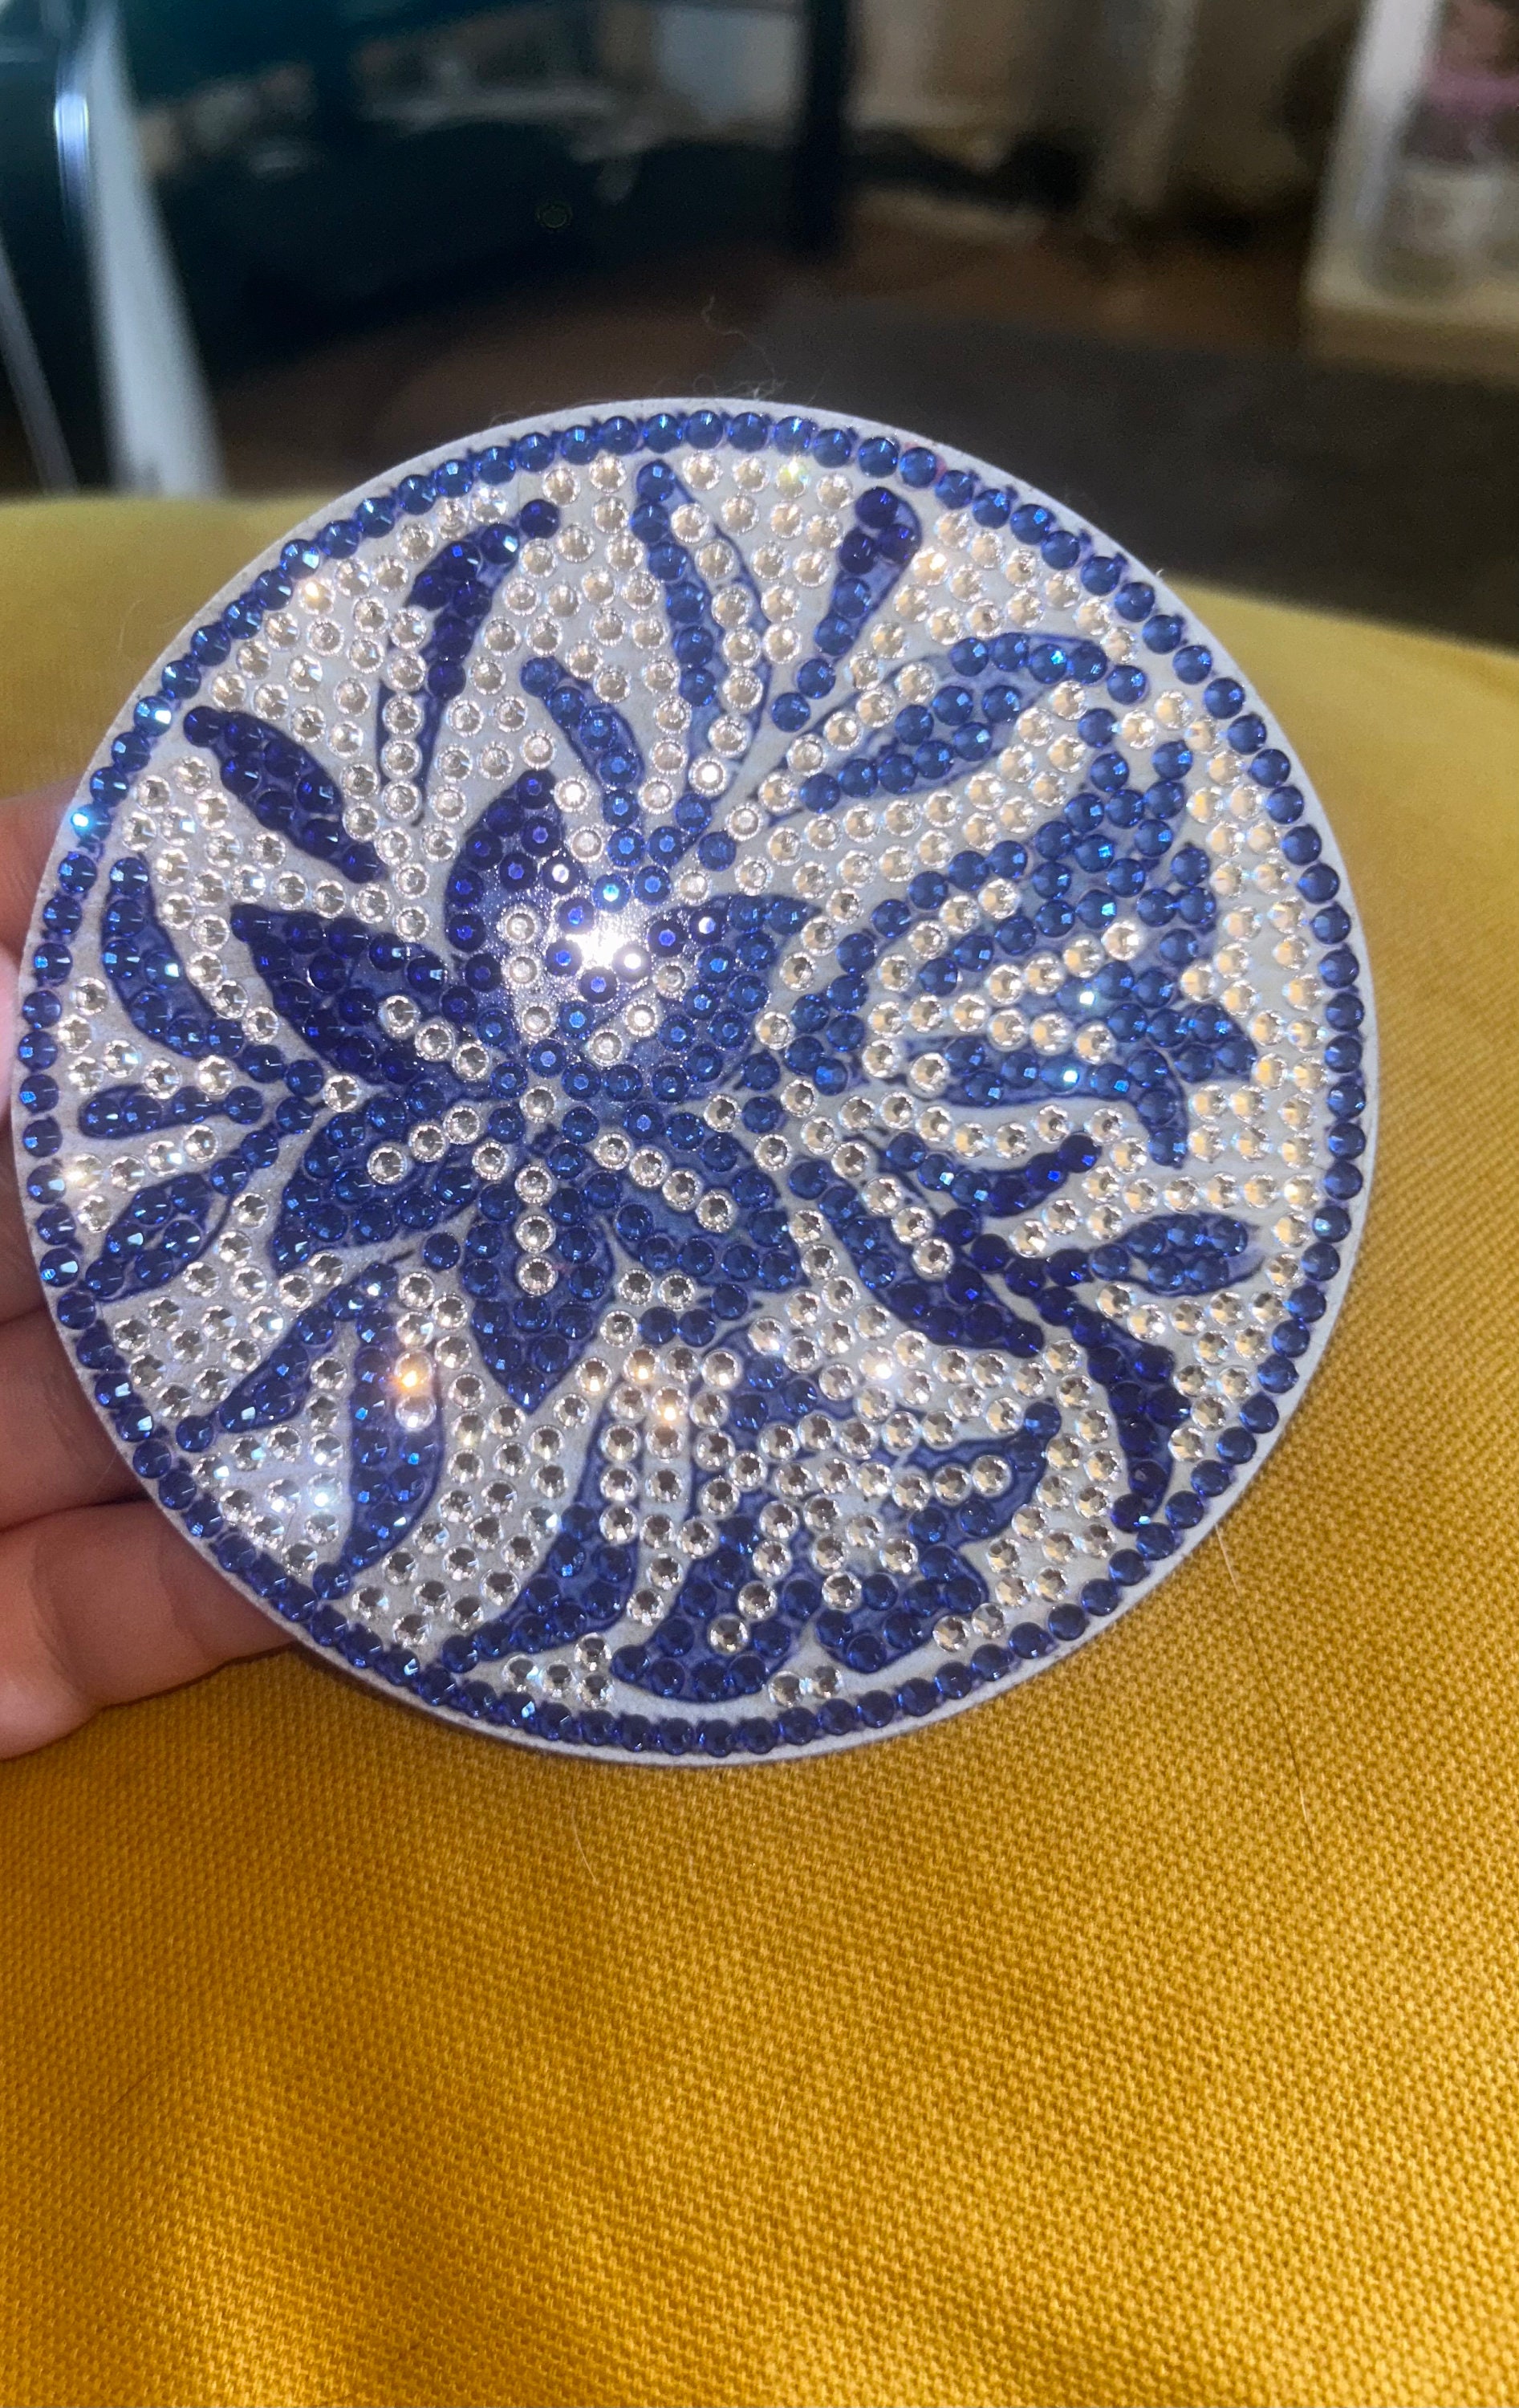  Libfx Diamond Art Coasters Kit with Holder, 8 Pcs